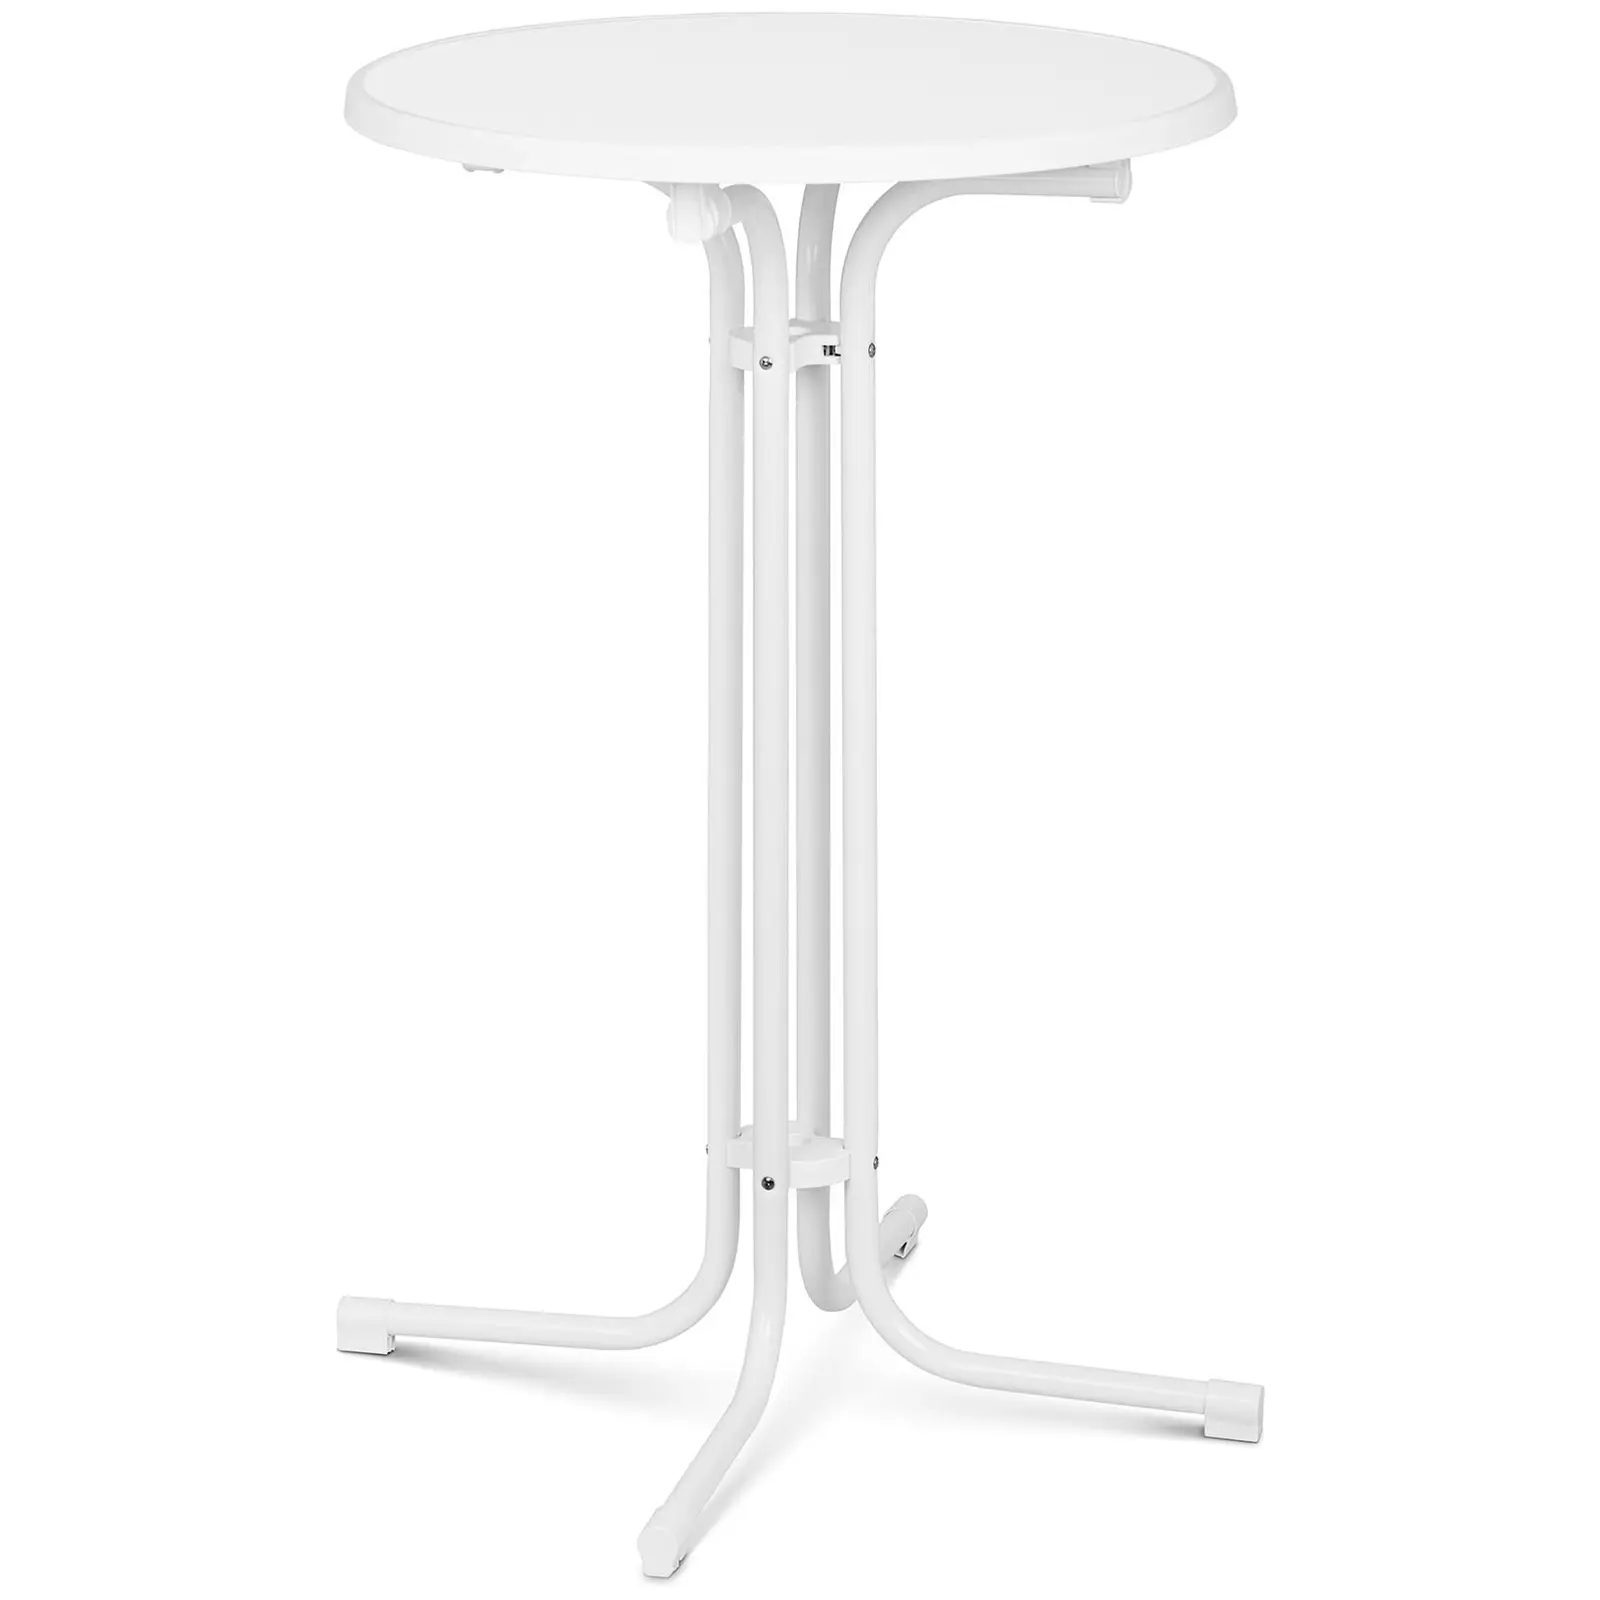 Koktejlový stůl - Ø 70 cm - skládací - bílý